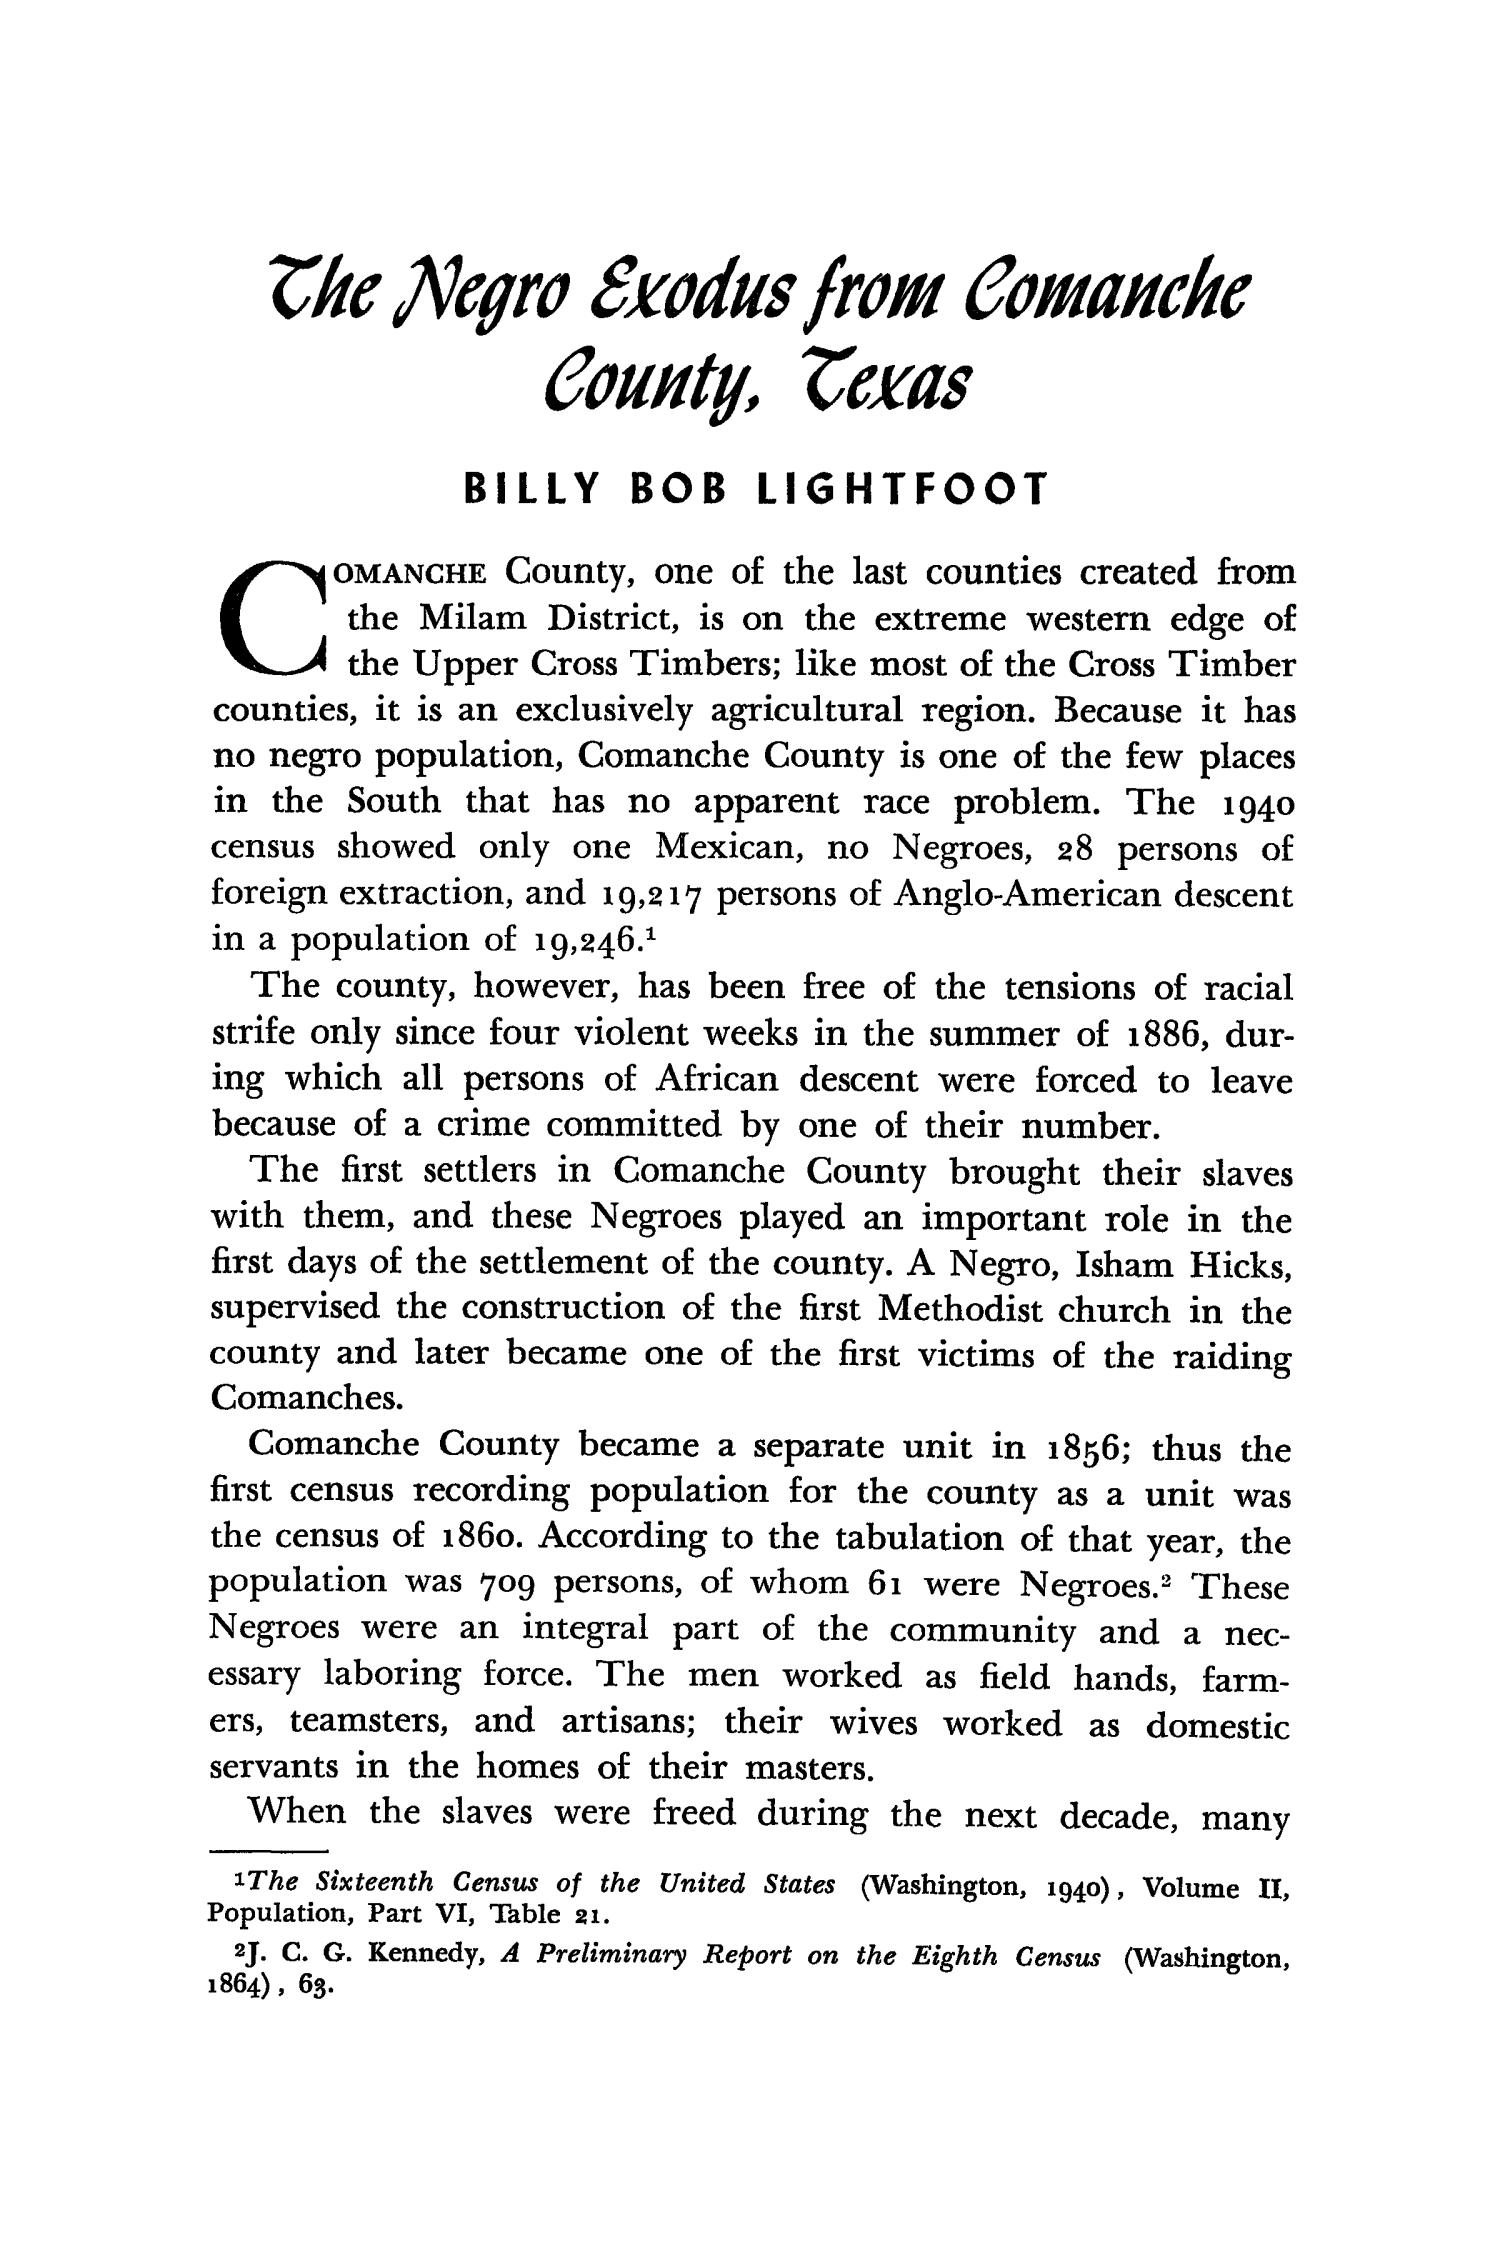 The Southwestern Historical Quarterly, Volume 56, July 1952 - April, 1953
                                                
                                                    407
                                                